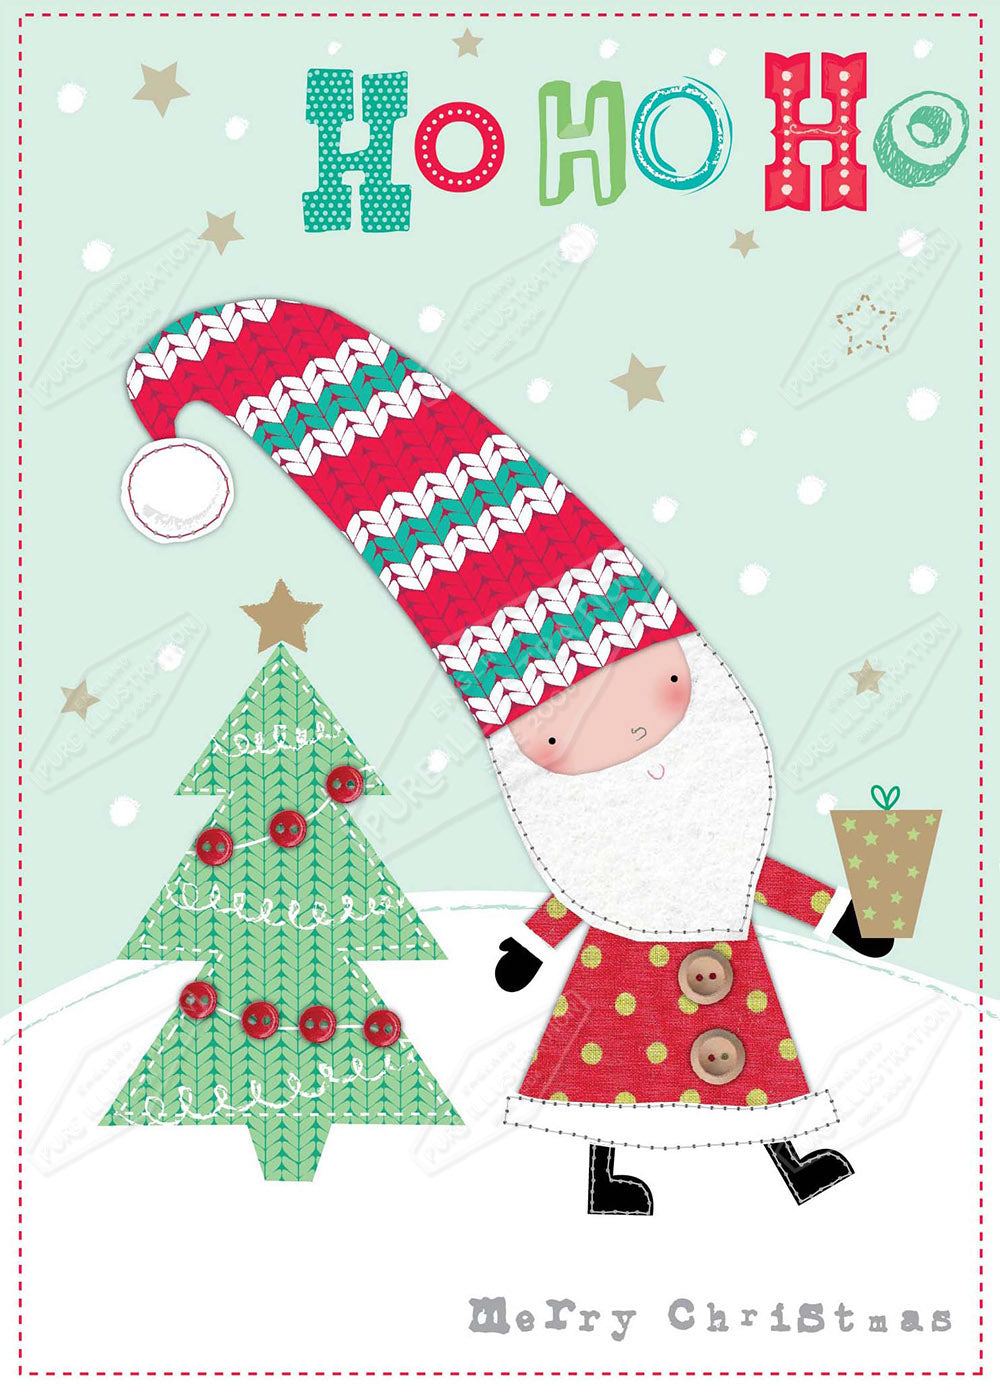 00032117AMC - Amanda McDonough is represented by Pure Art Licensing Agency - Christmas Greeting Card Design